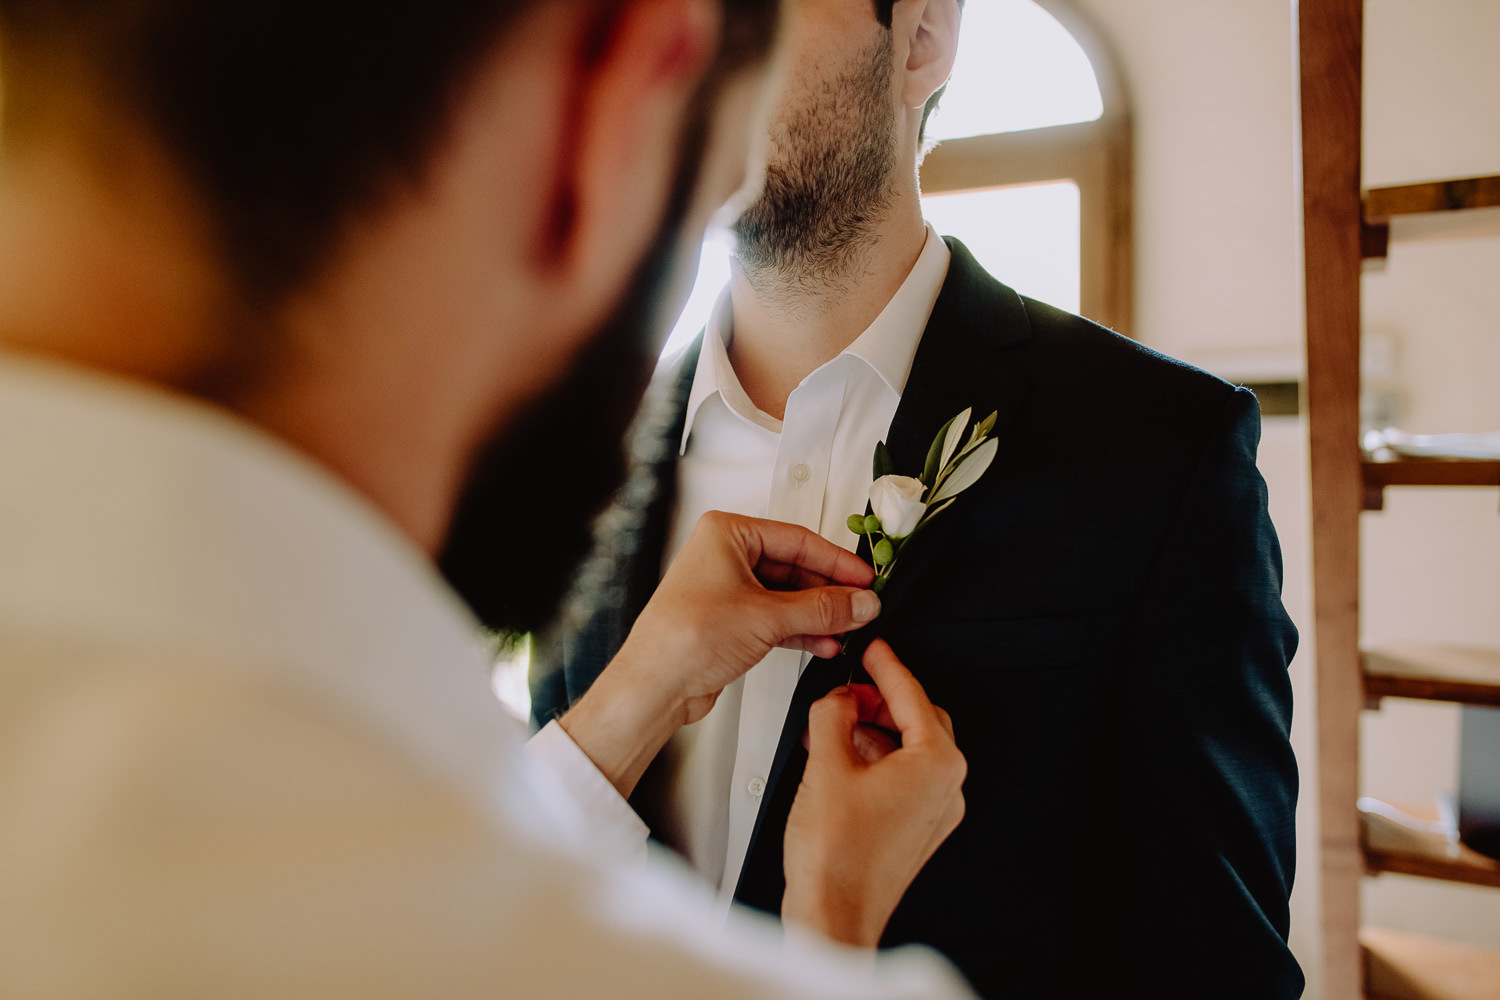 Umbria wedding photographer groom get ready with groomsman